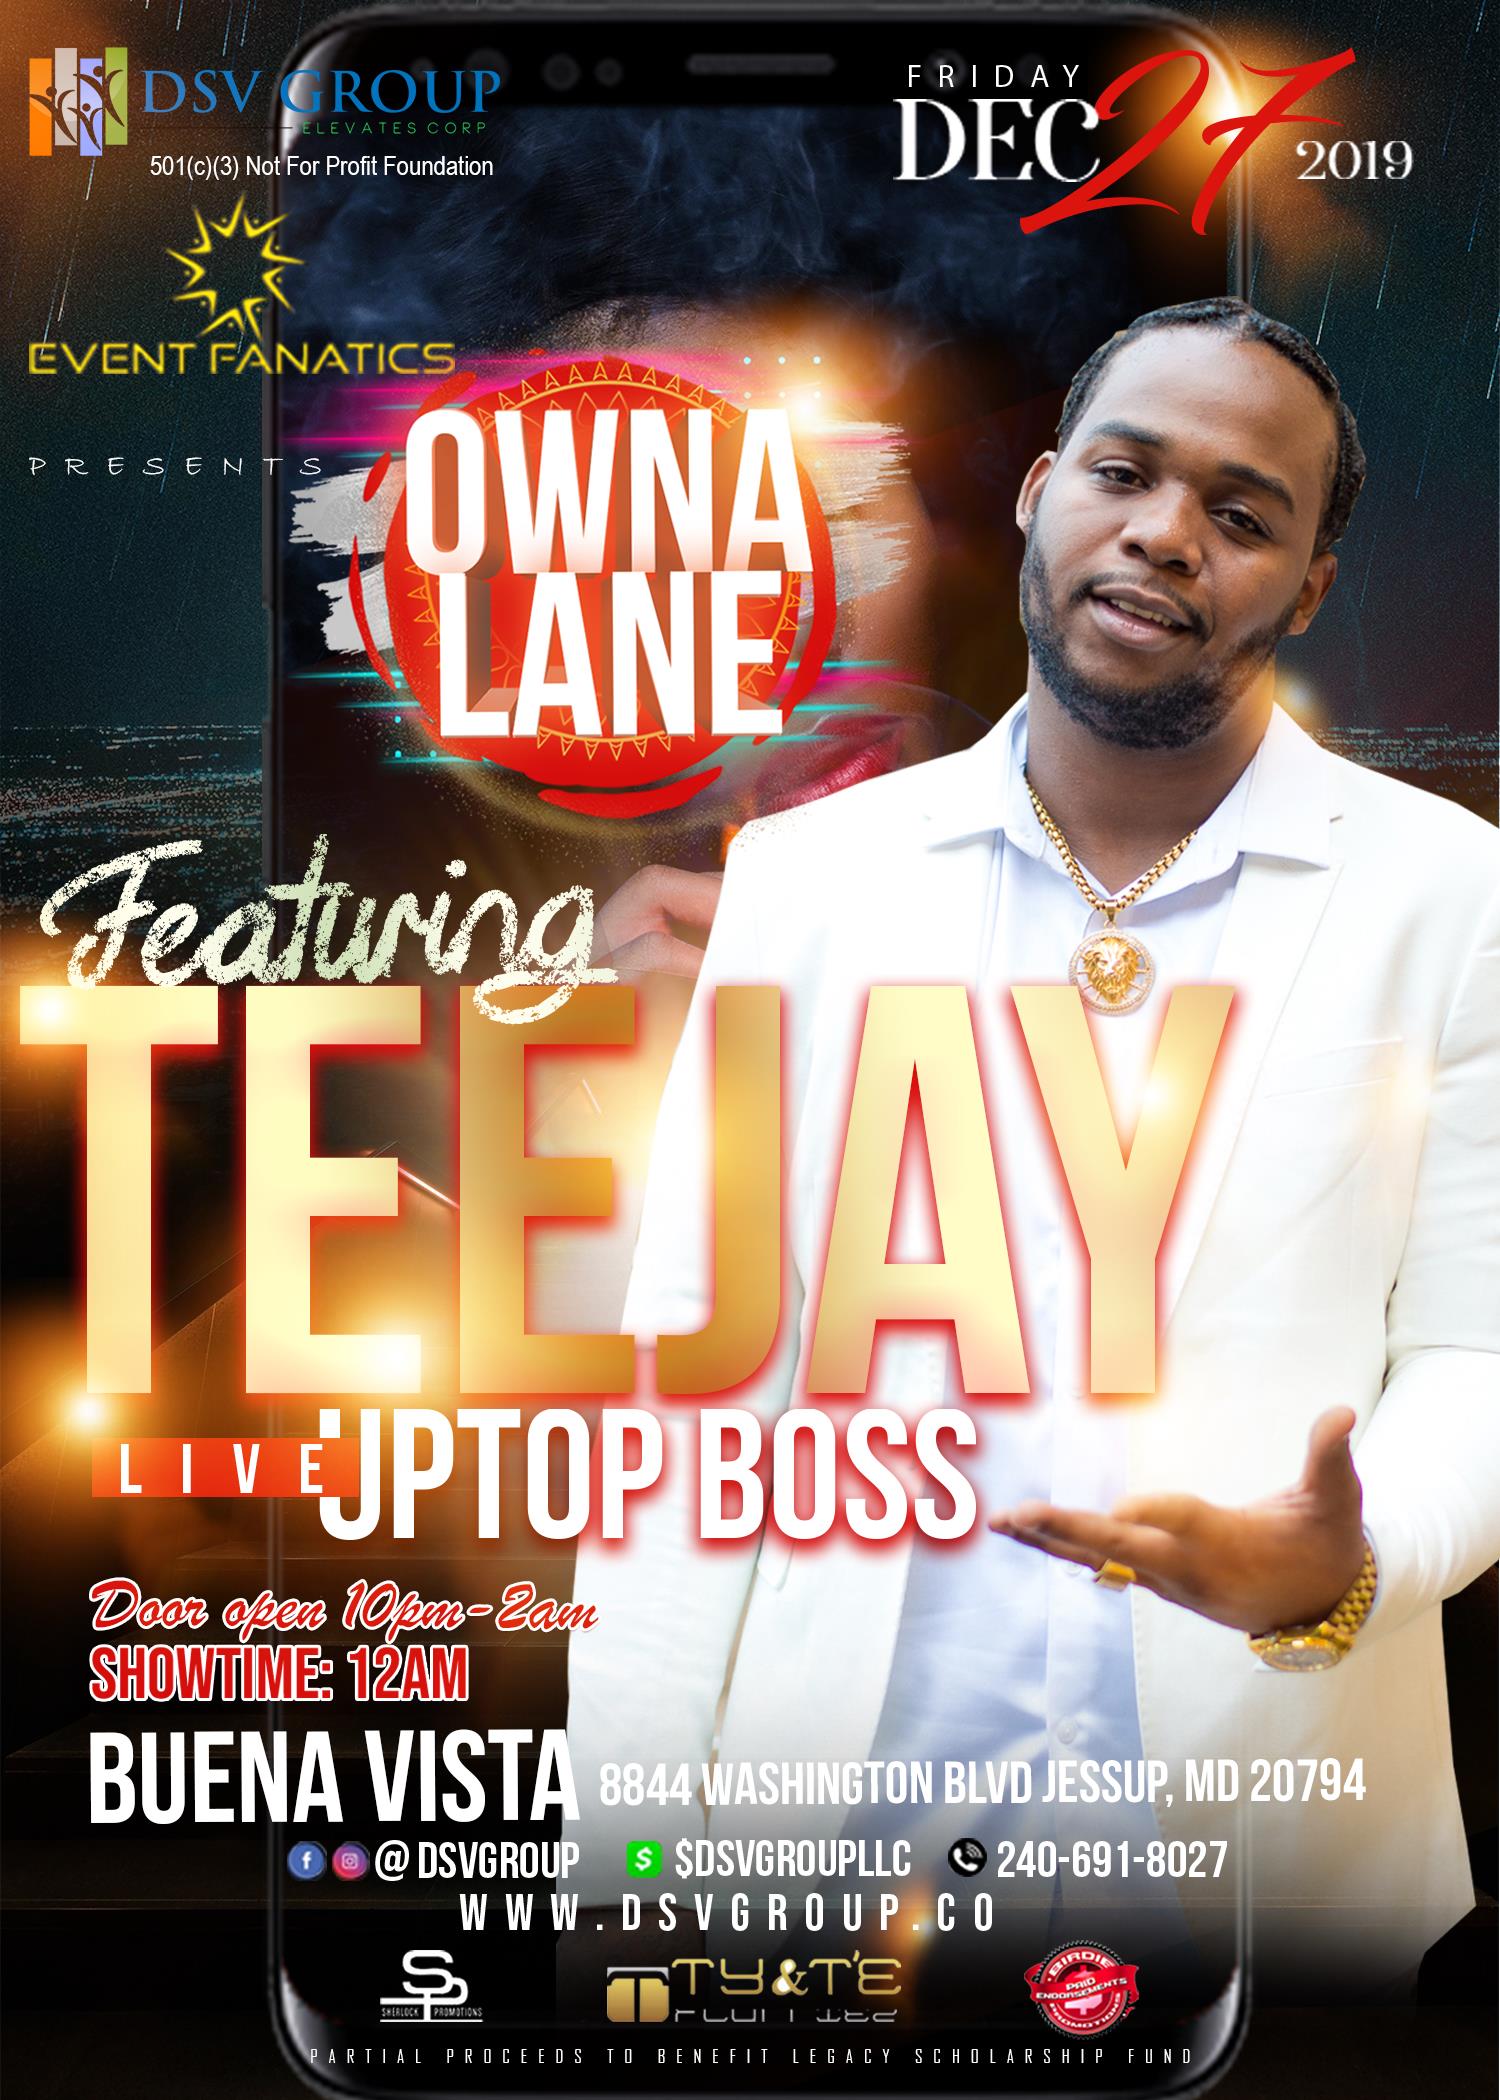 Buy Tickets to Teejay Uptop Boss - Owna Lane - Dec 27, 2019 in JESSUP ...